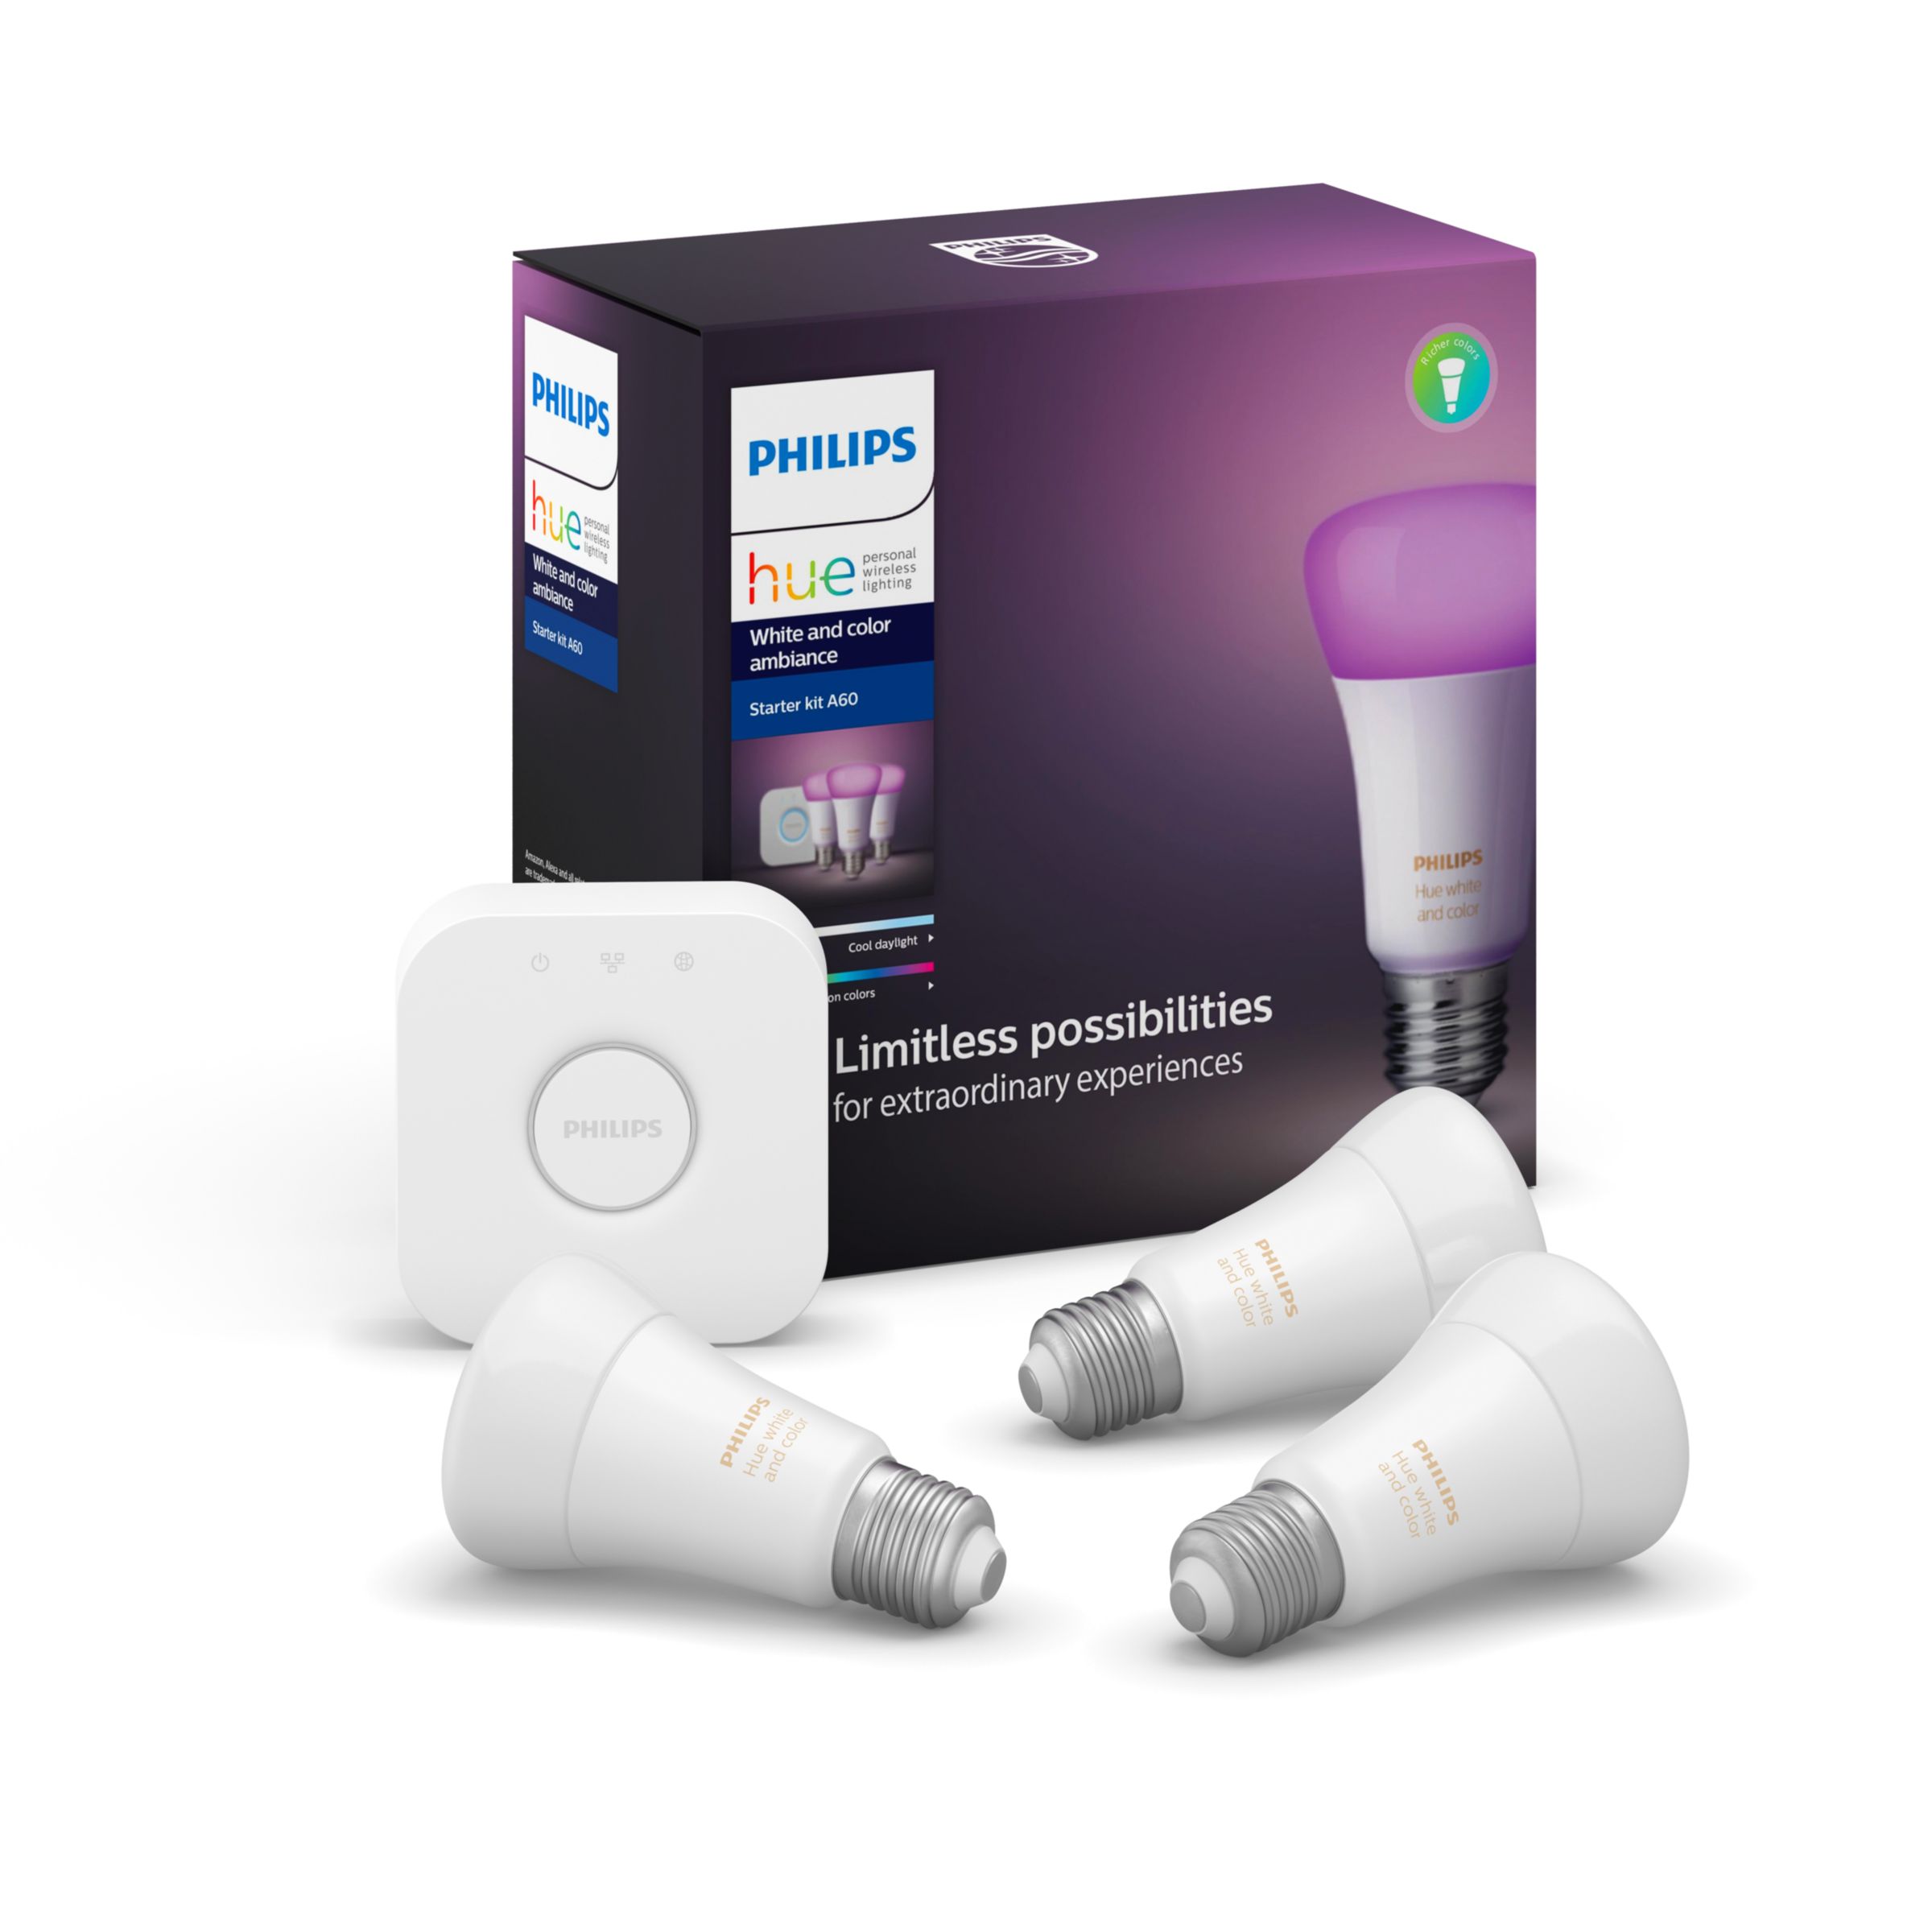 Hue White and color ambiance Starter kit: 3 E27 smart bulbs (800 